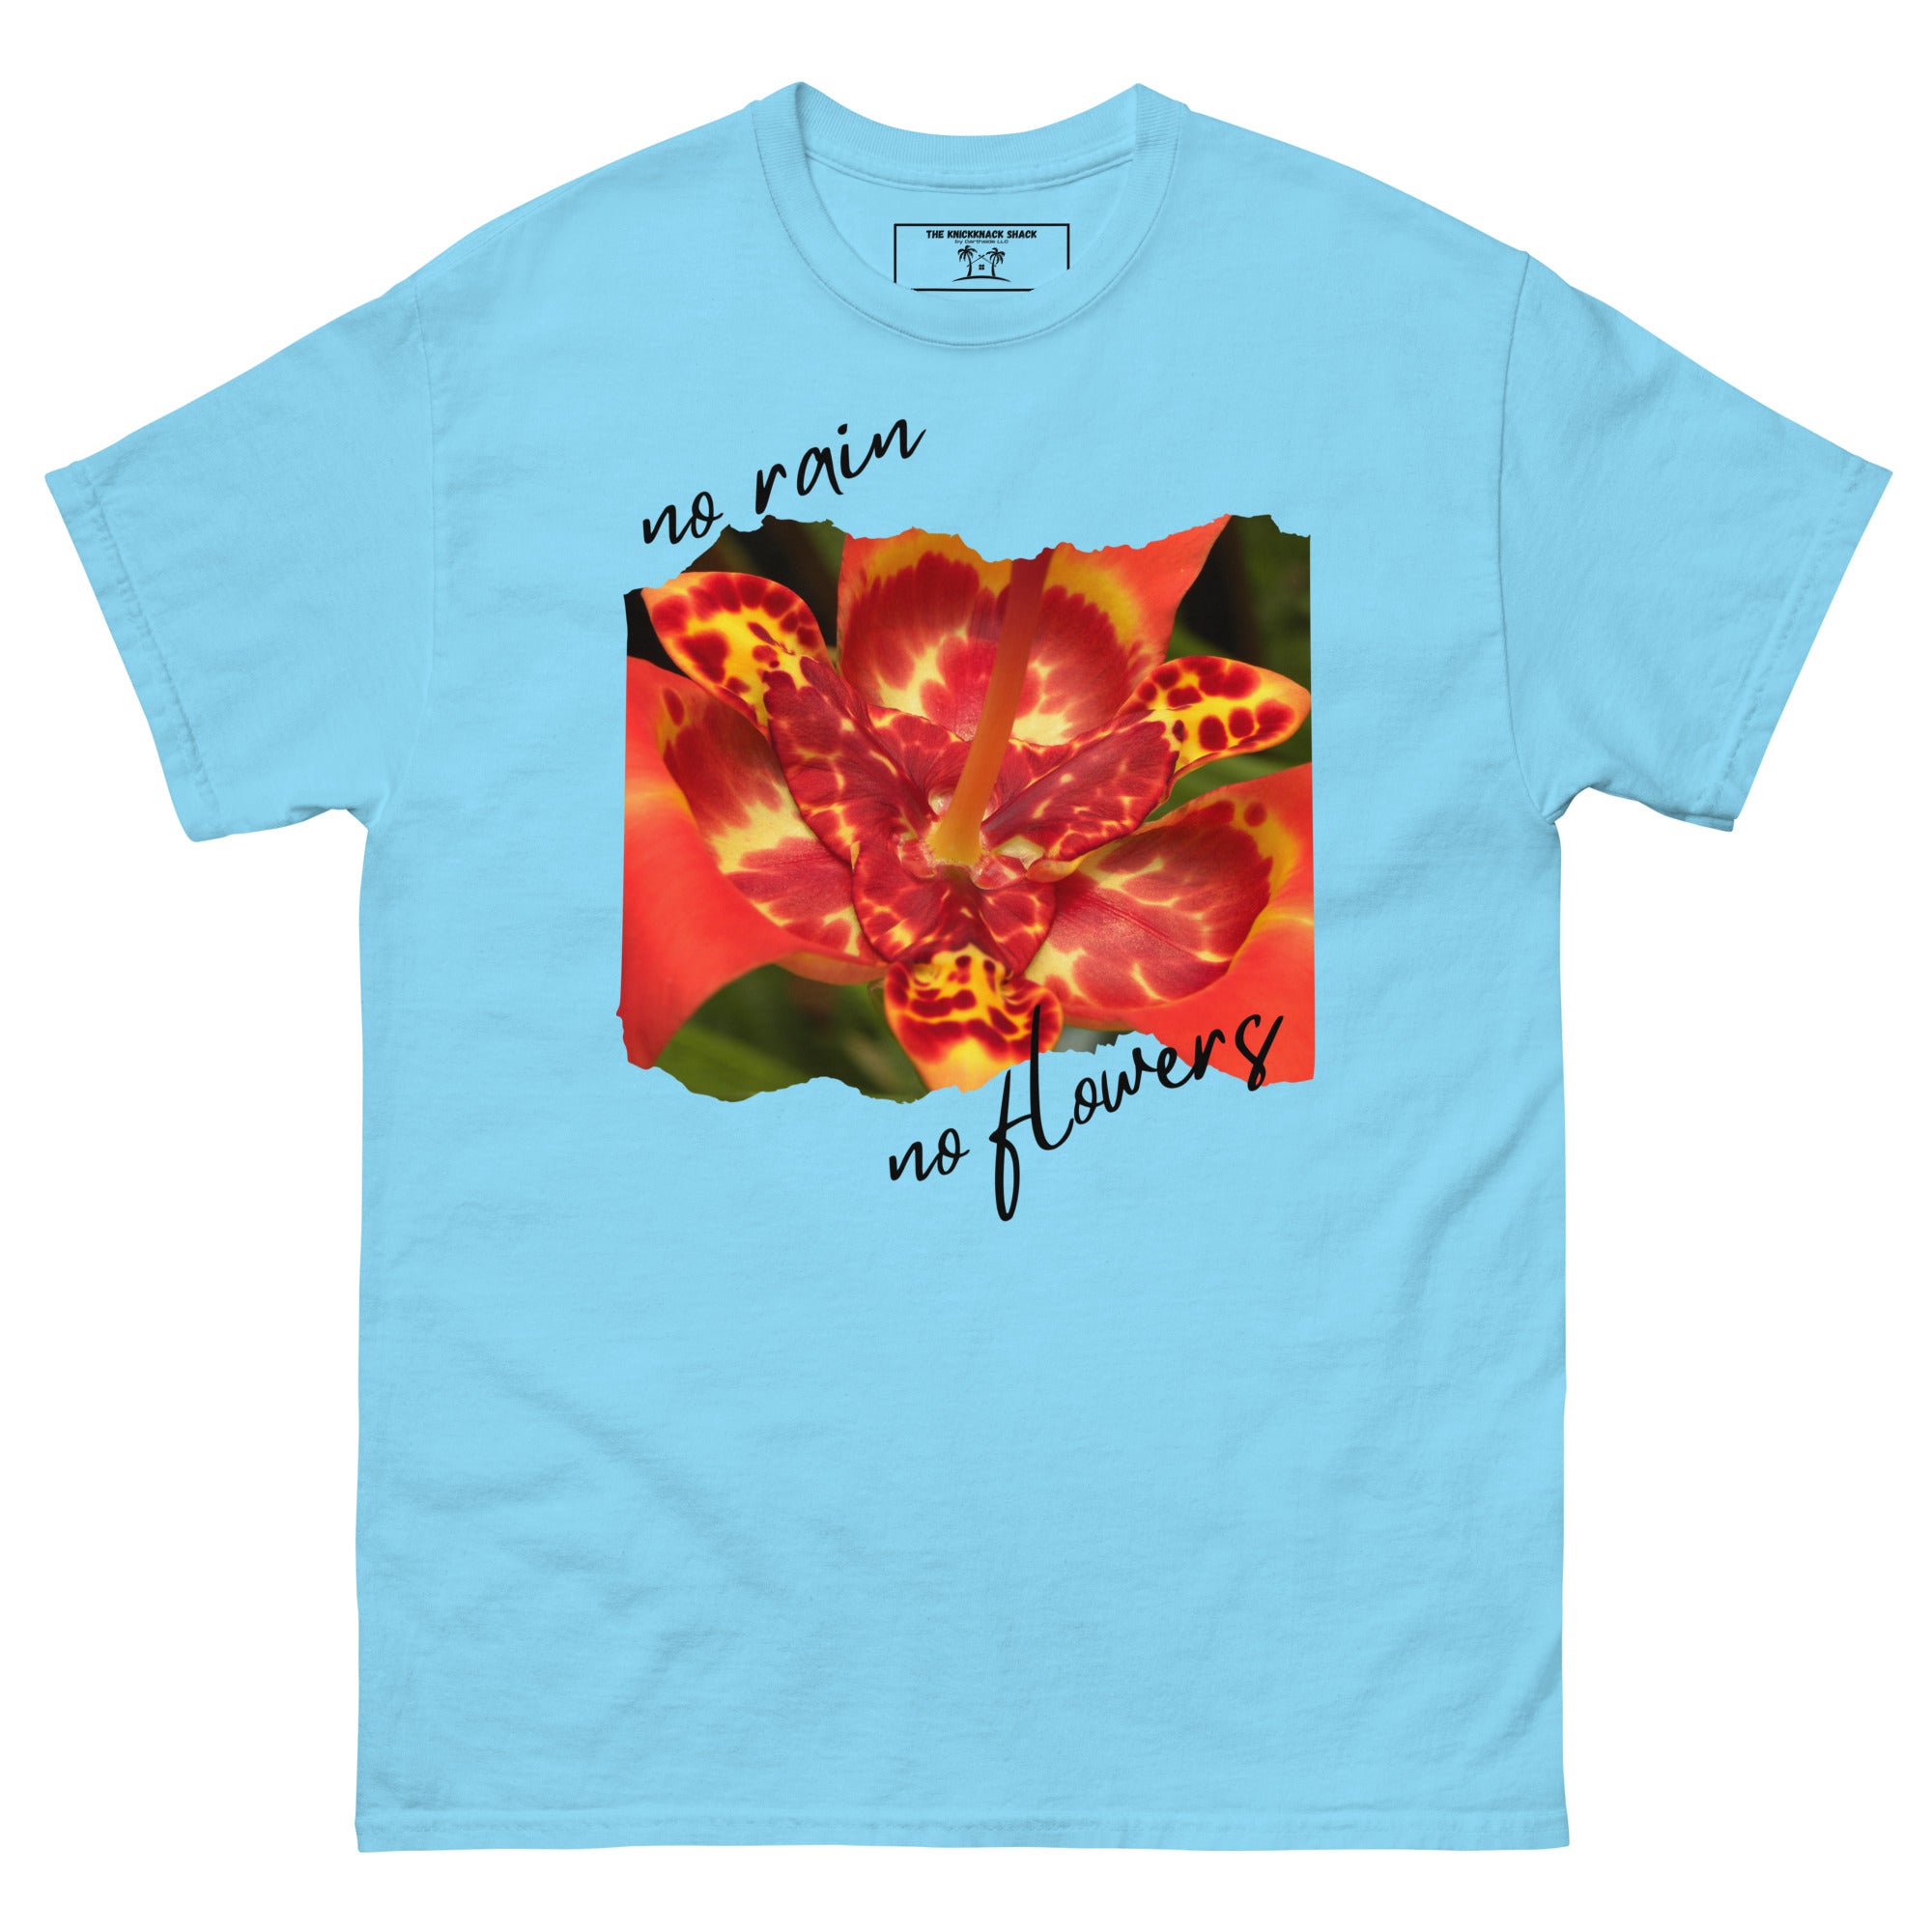 Camiseta clásica: sin lluvia, sin flores (colores claros)